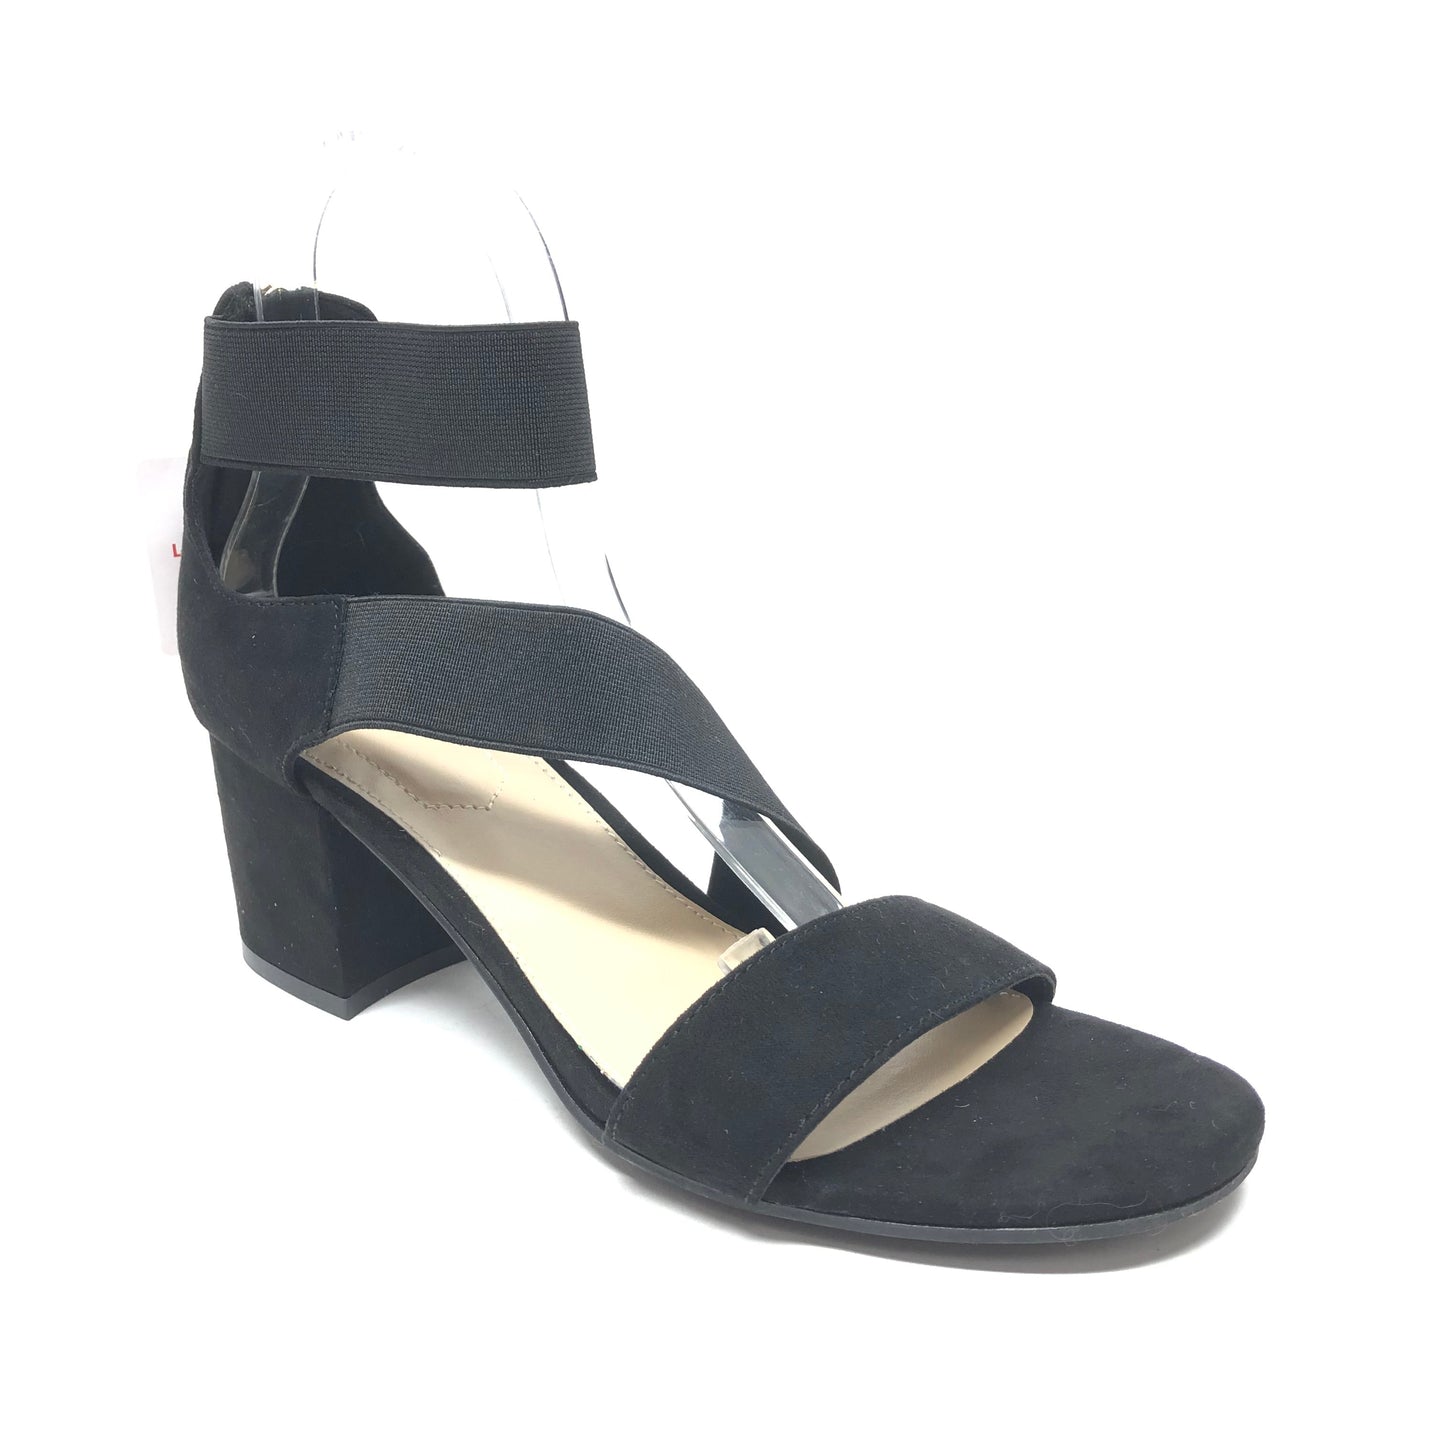 Black Sandals Heels Block Liz Claiborne, Size 8.5